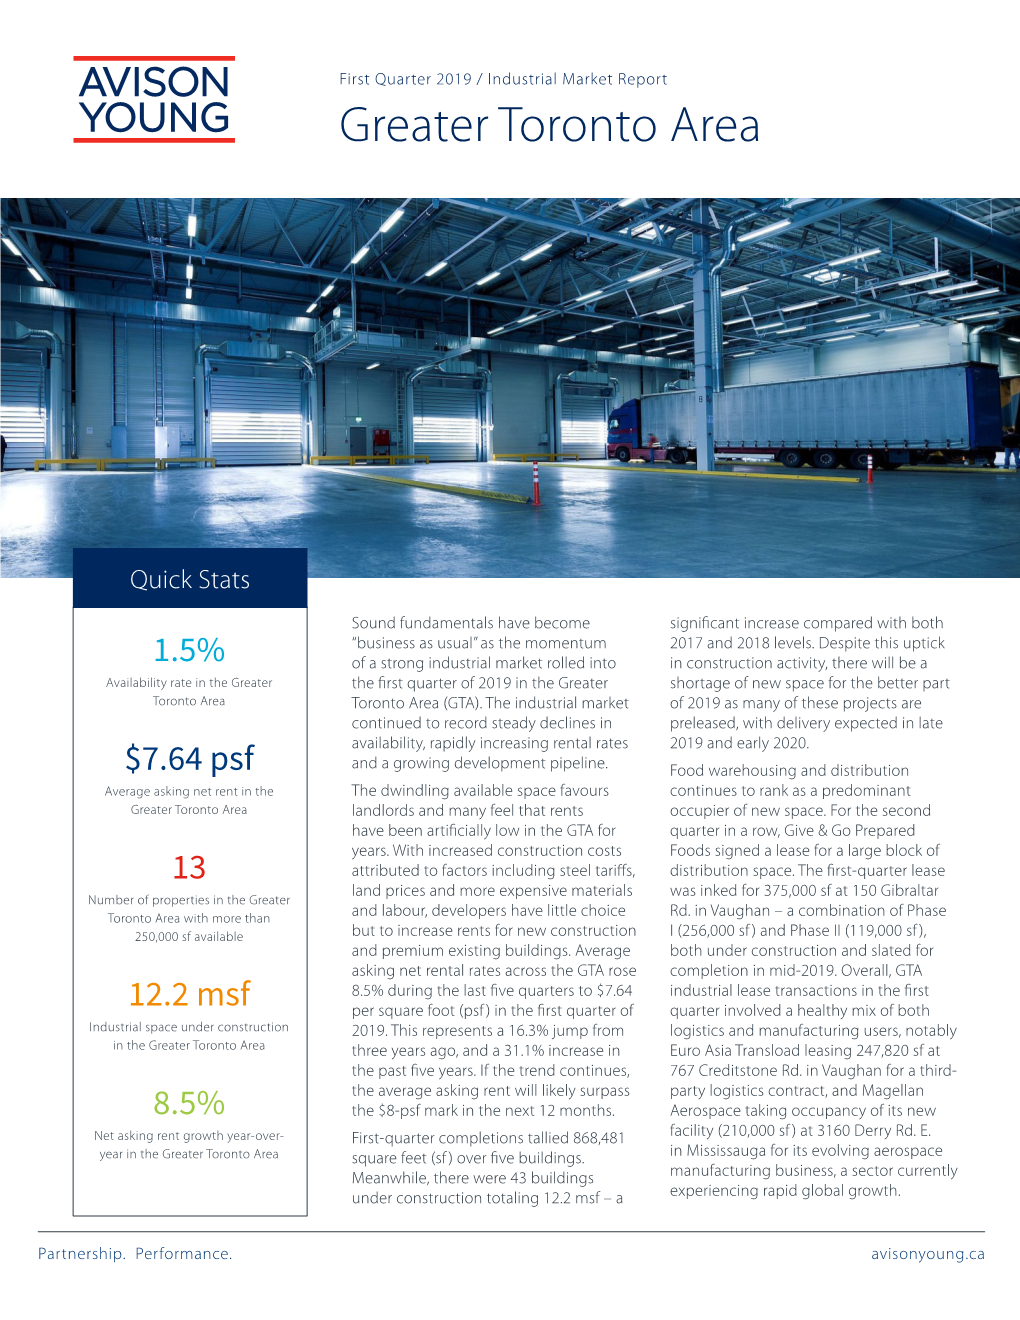 Greater Toronto Area Industrial Market Report